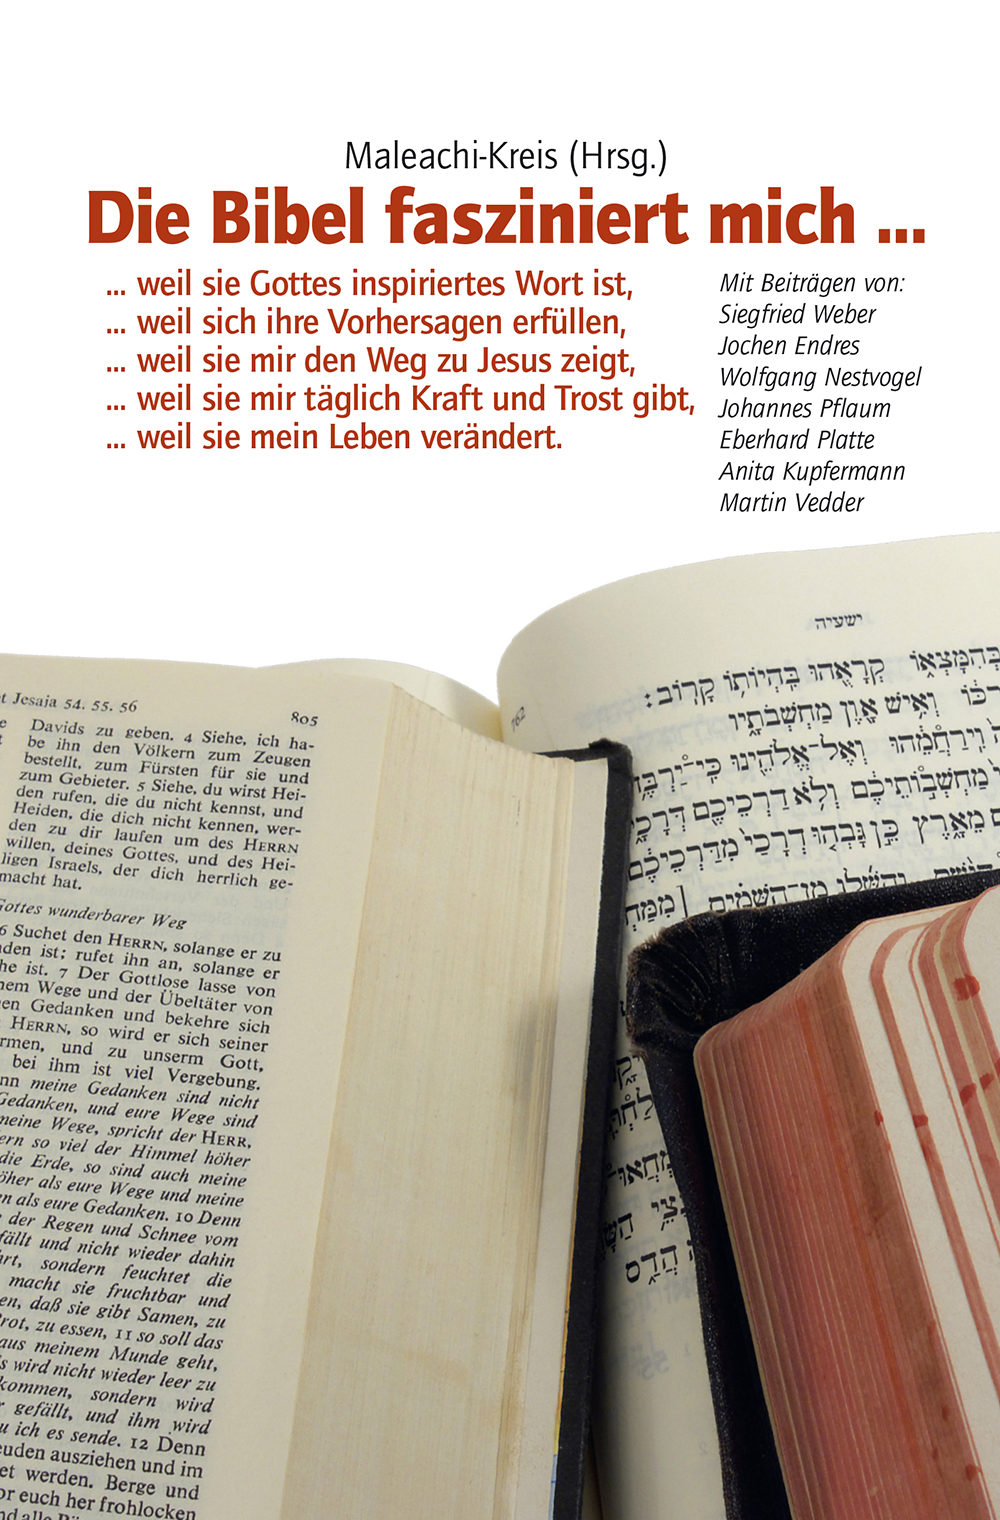 CLV_die-bibel-fasziniert-mich_maleachi-kreis-hrsg_256244_1